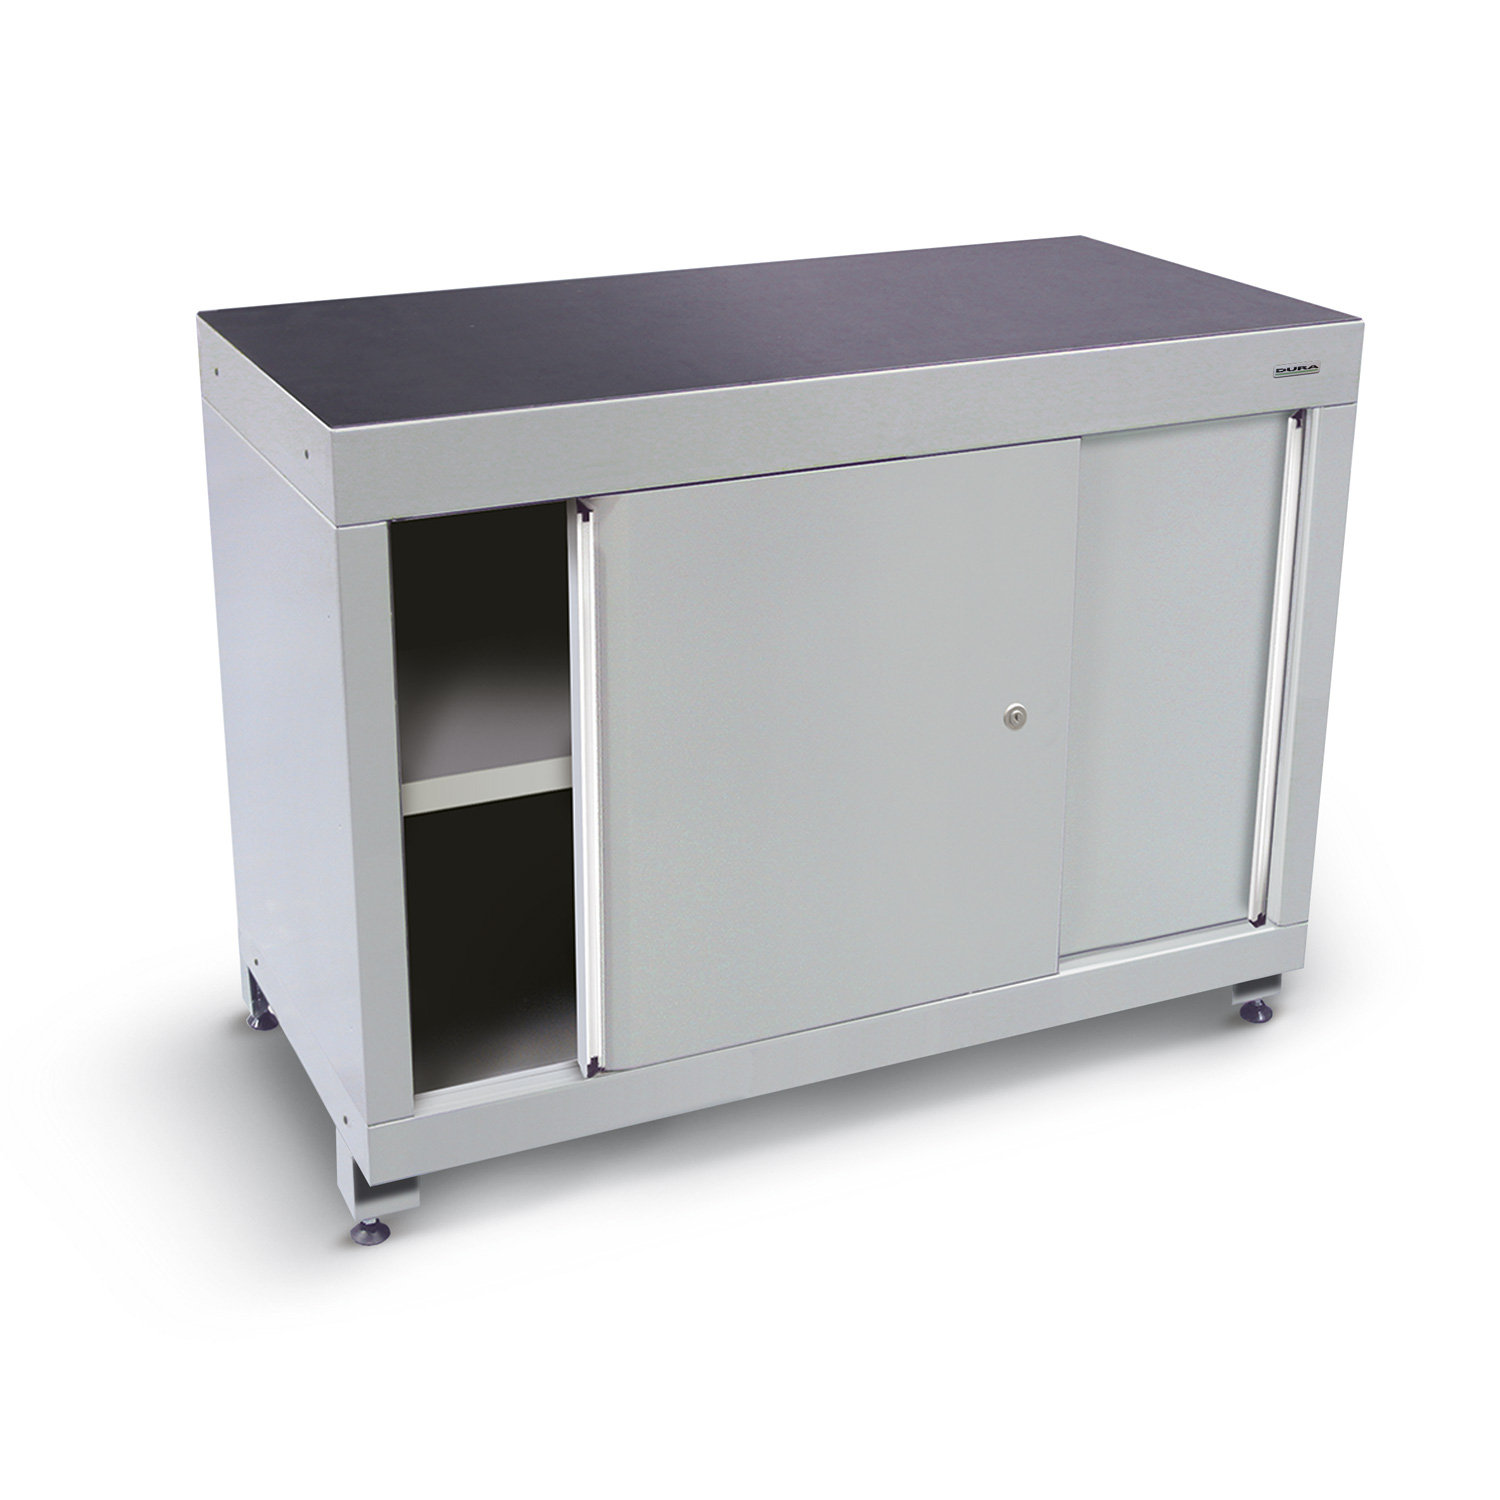 1200mm wide base cabinet (double sliding doors/feet)